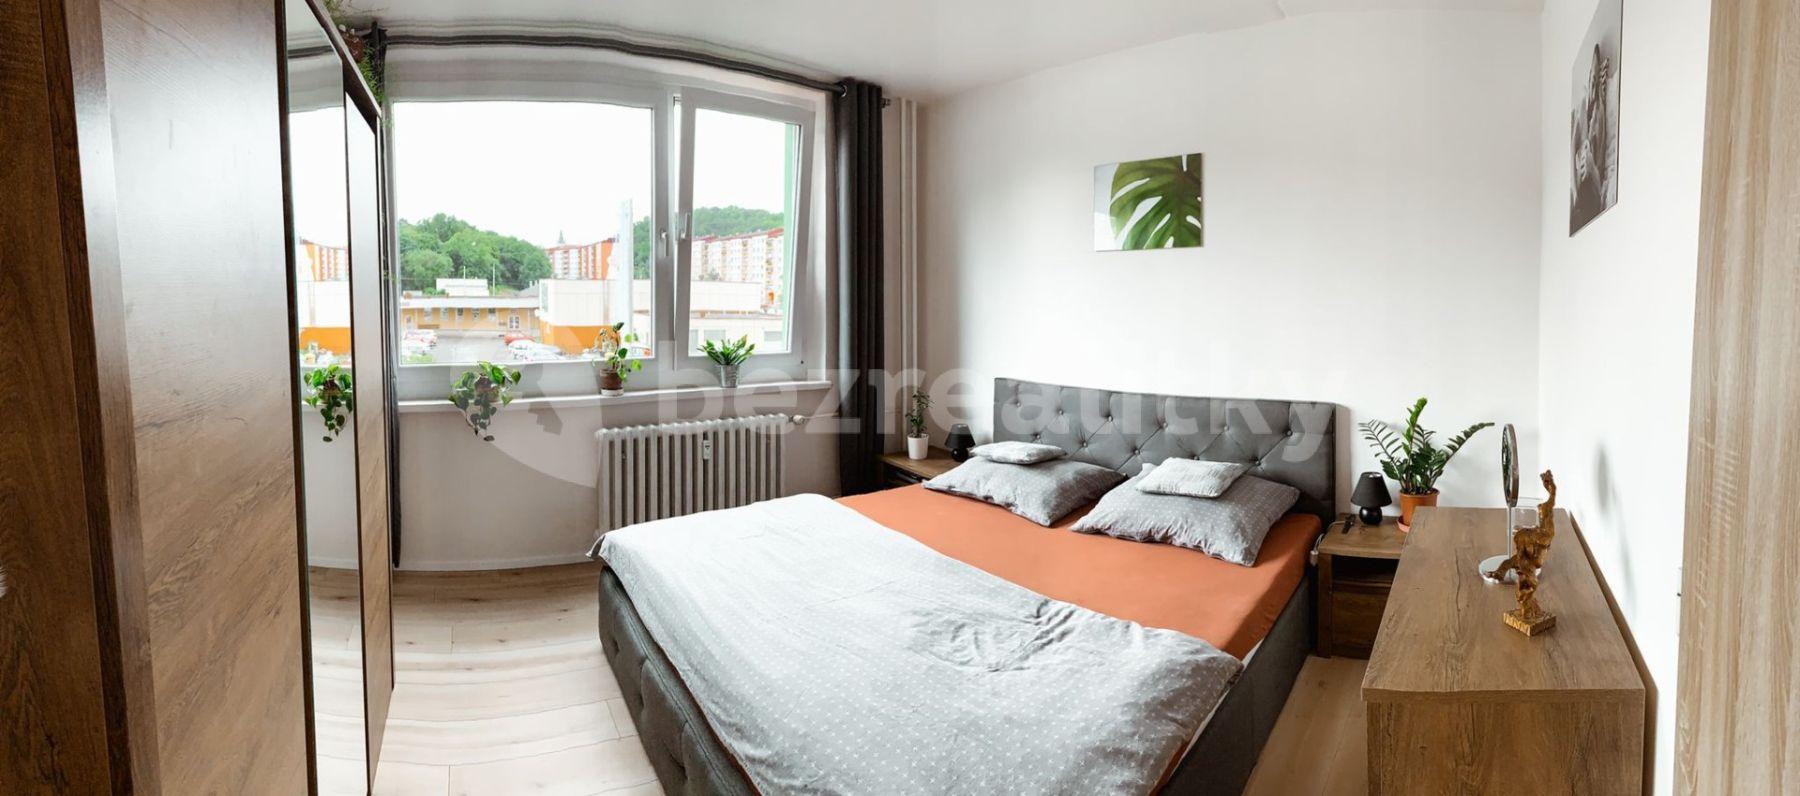 2 bedroom with open-plan kitchen flat for sale, 69 m², Rovná, Teplice, Ústecký Region